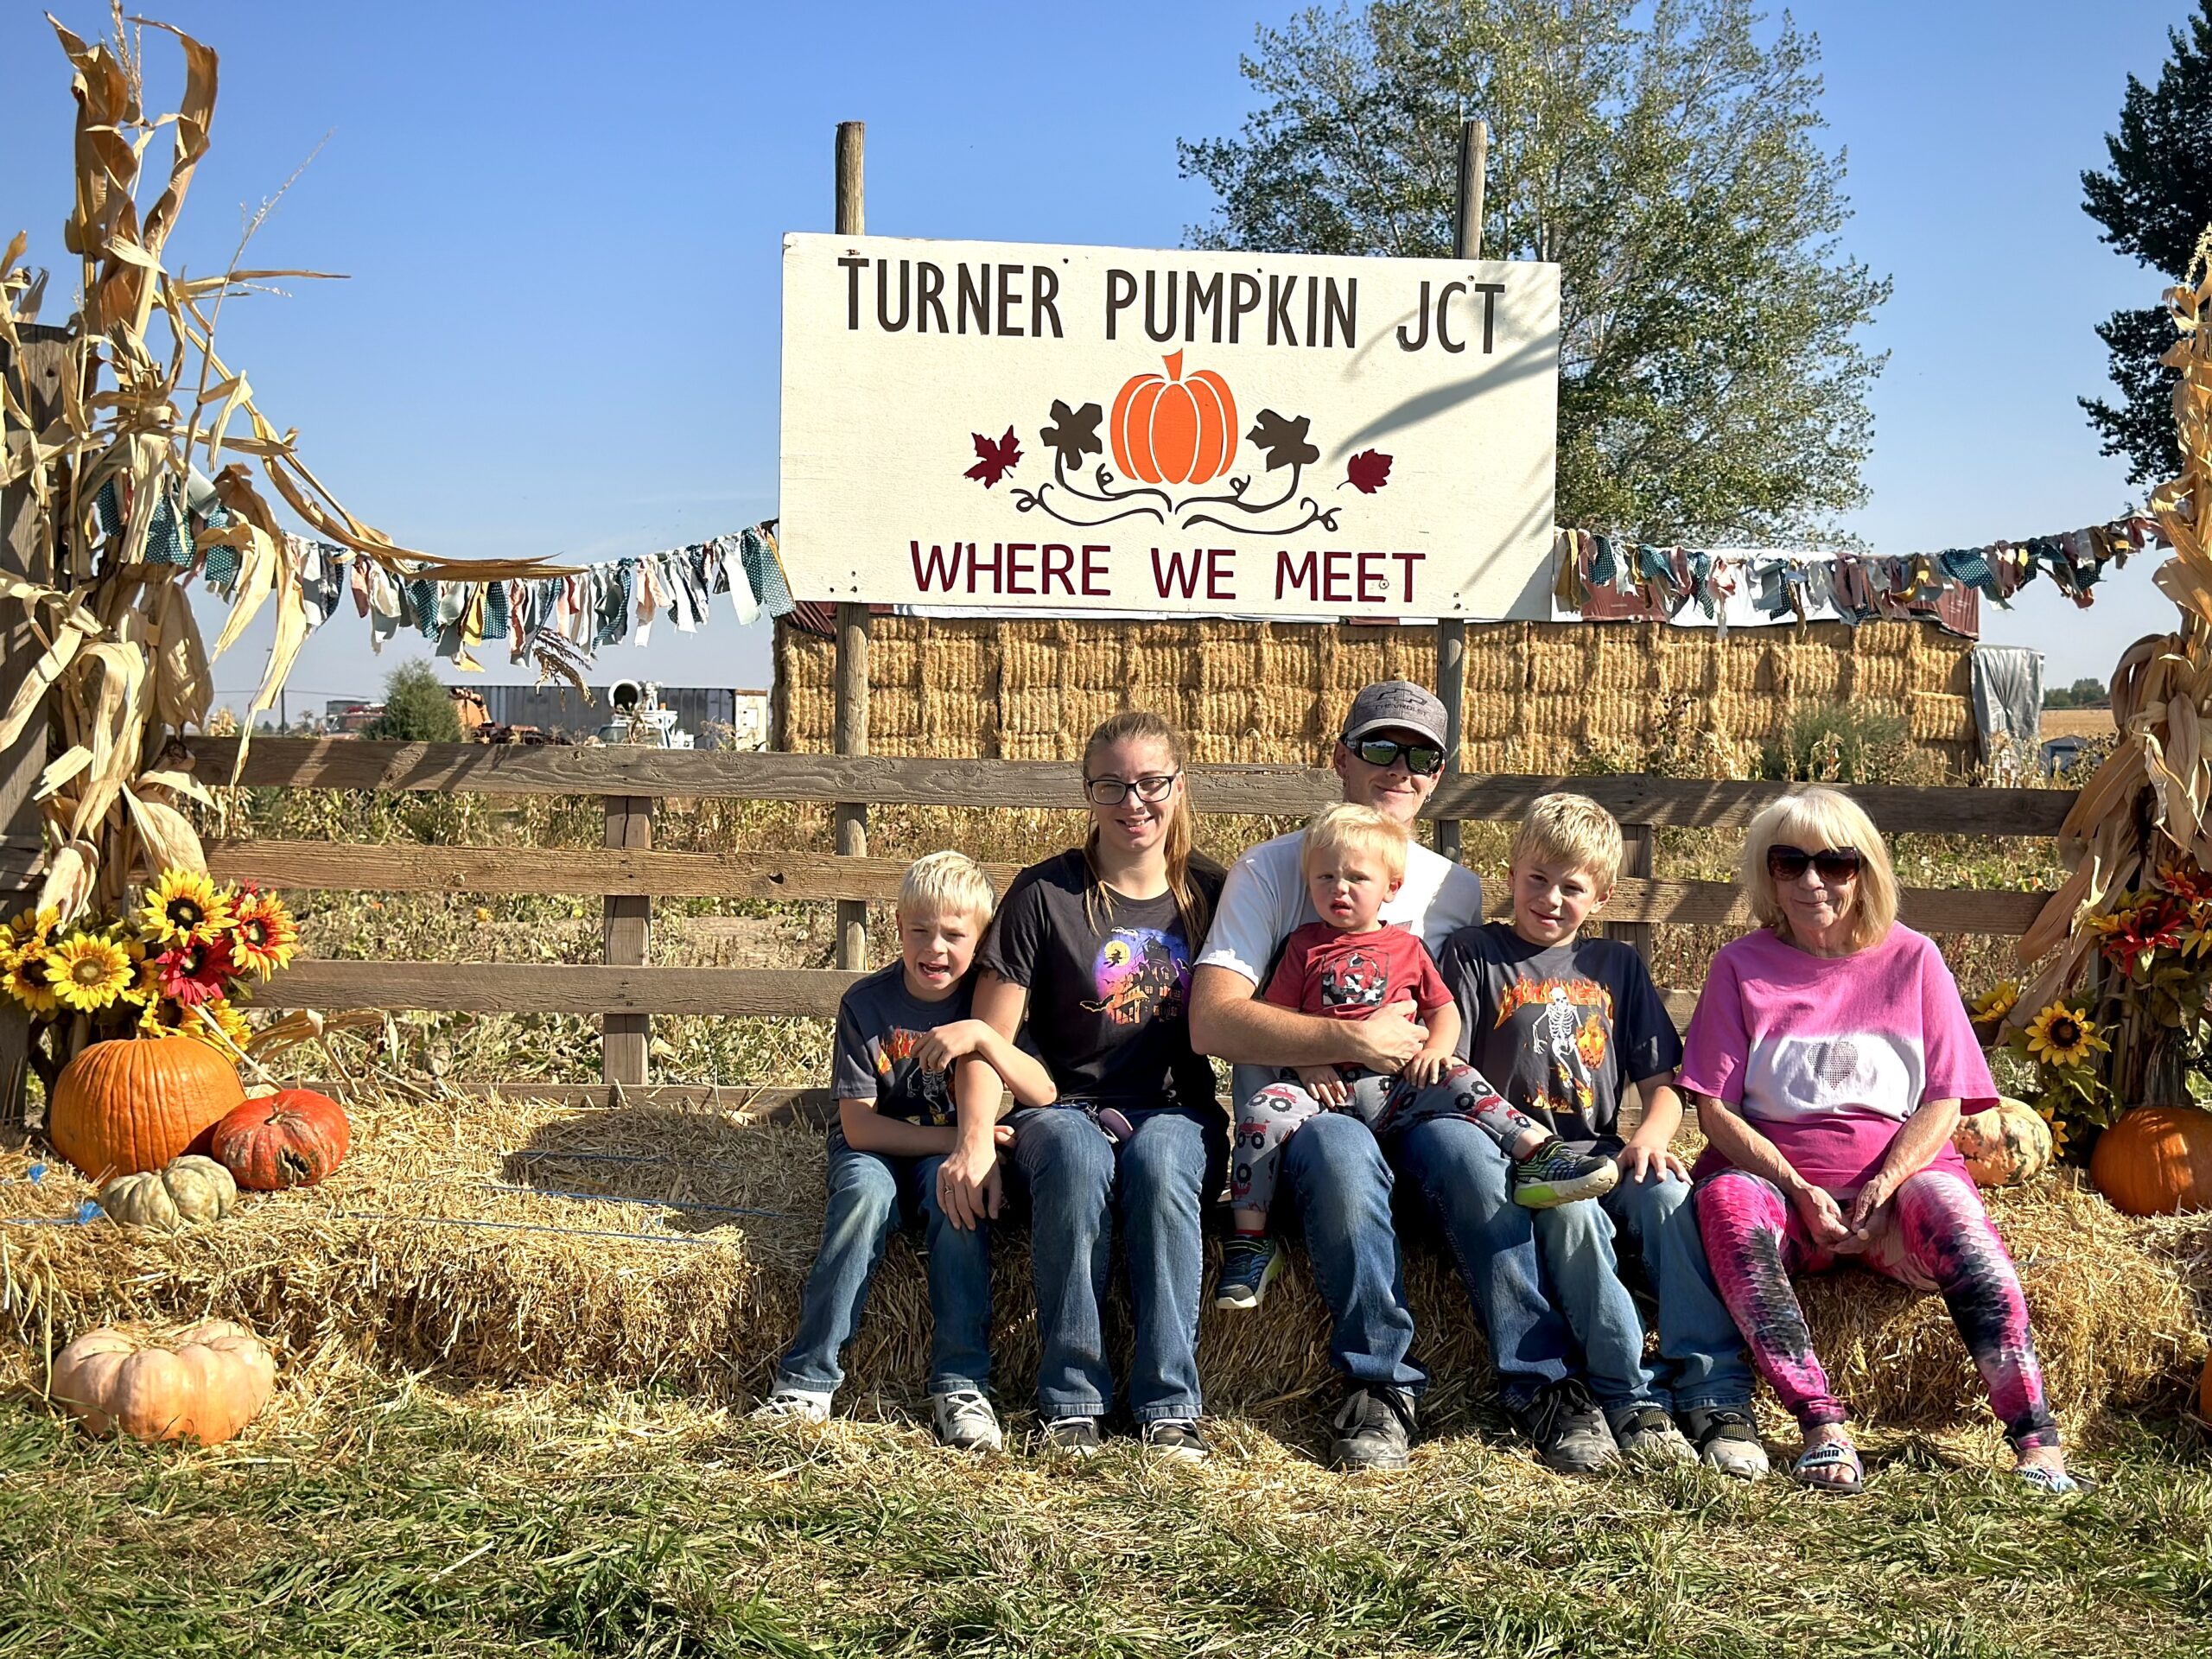 Turner pumpkin junction -134